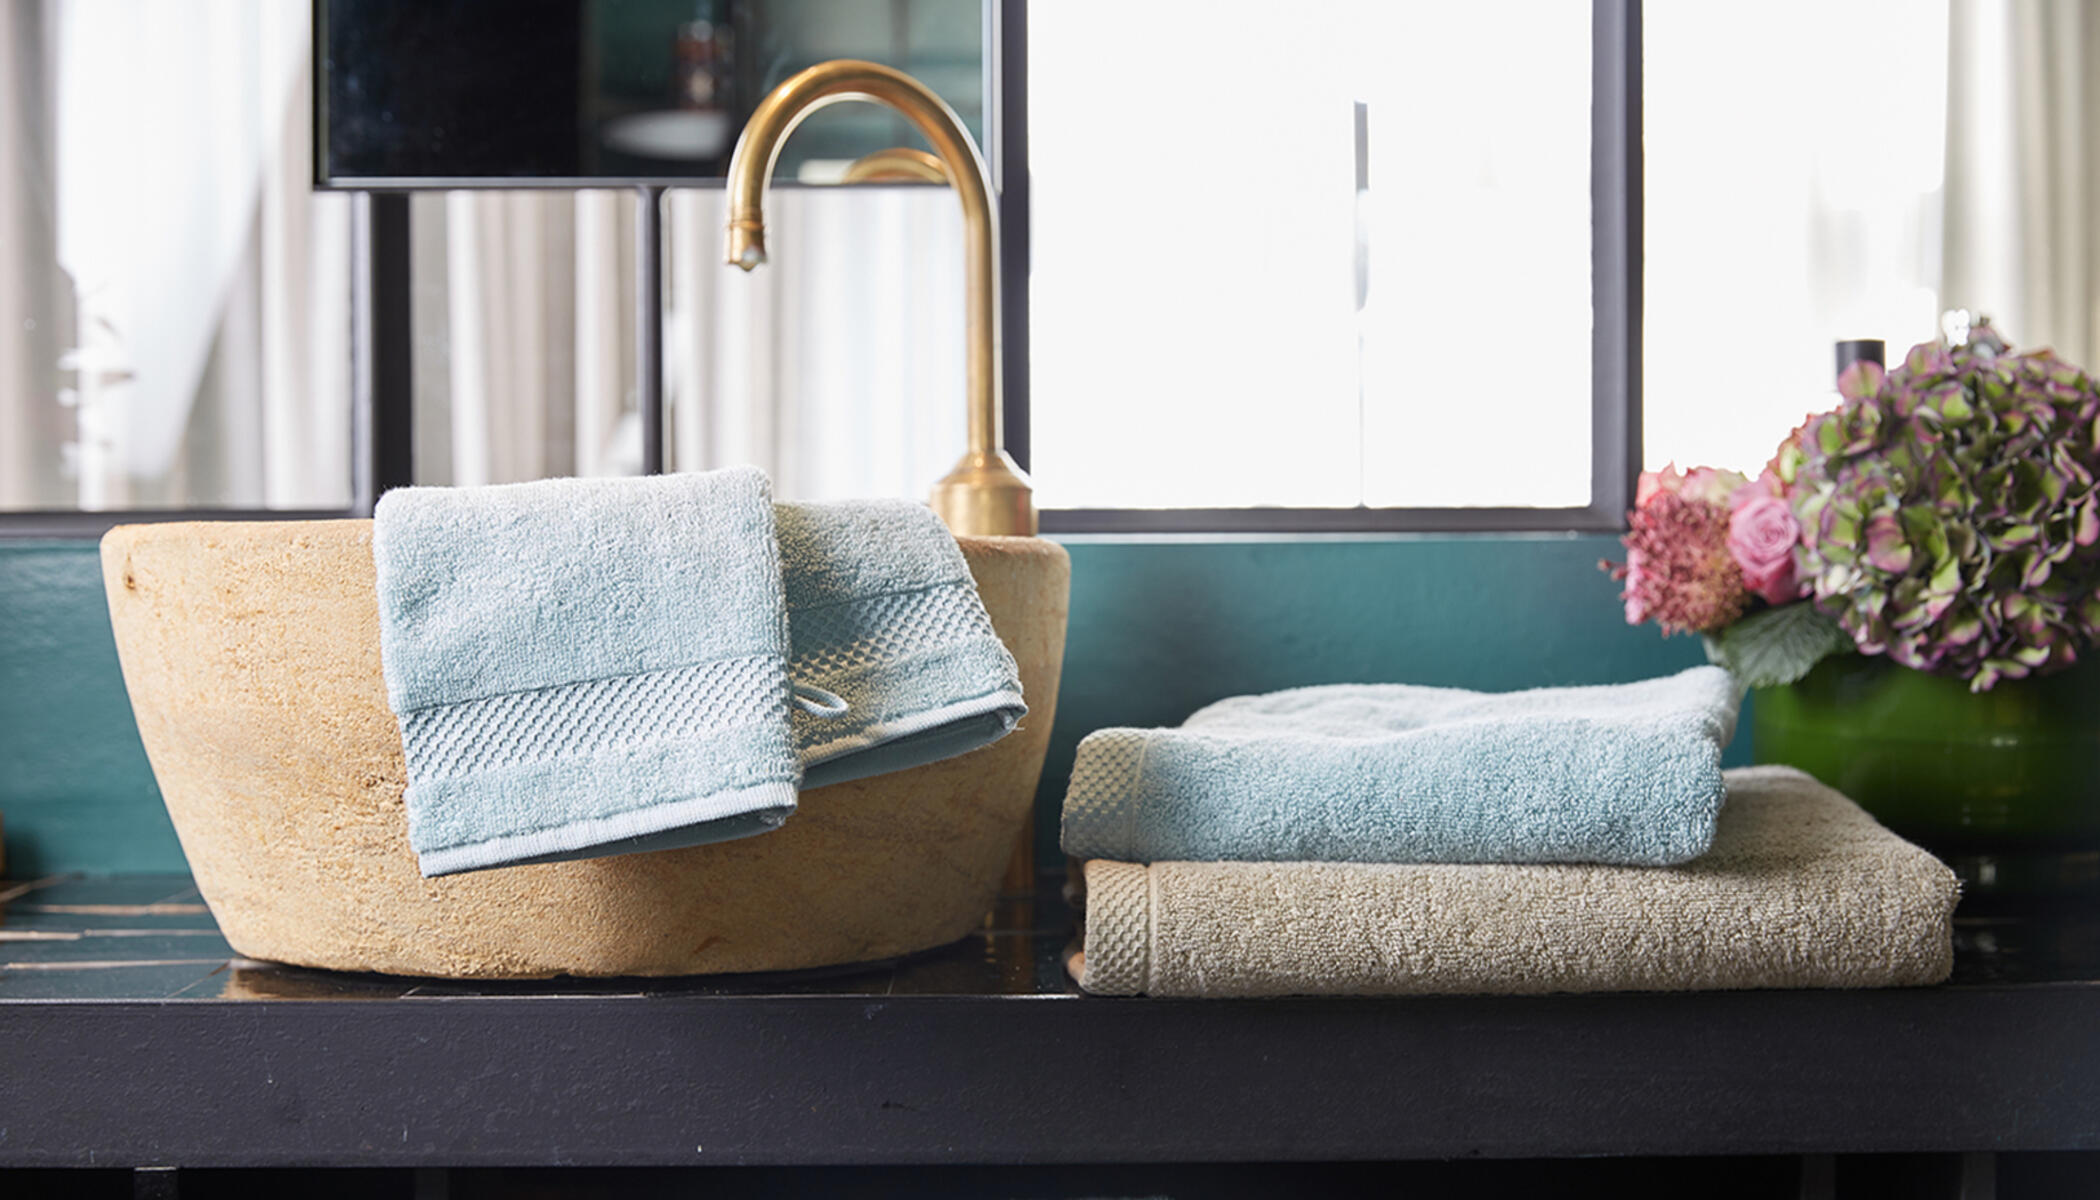 Florence bath towels